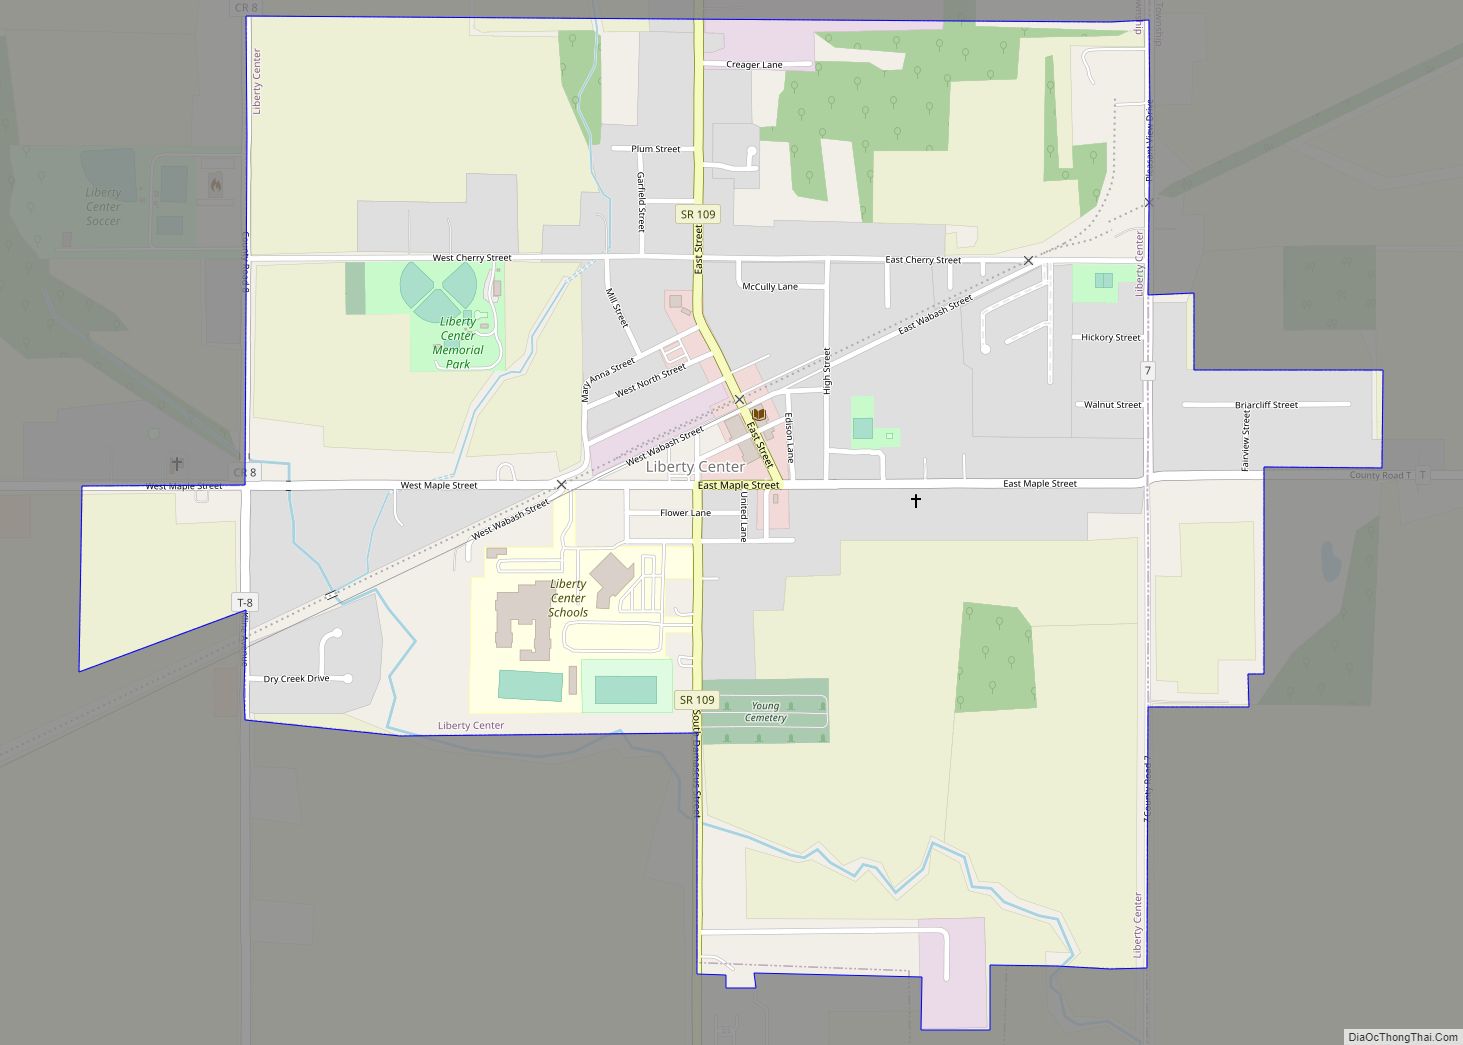 Map of Liberty Center village